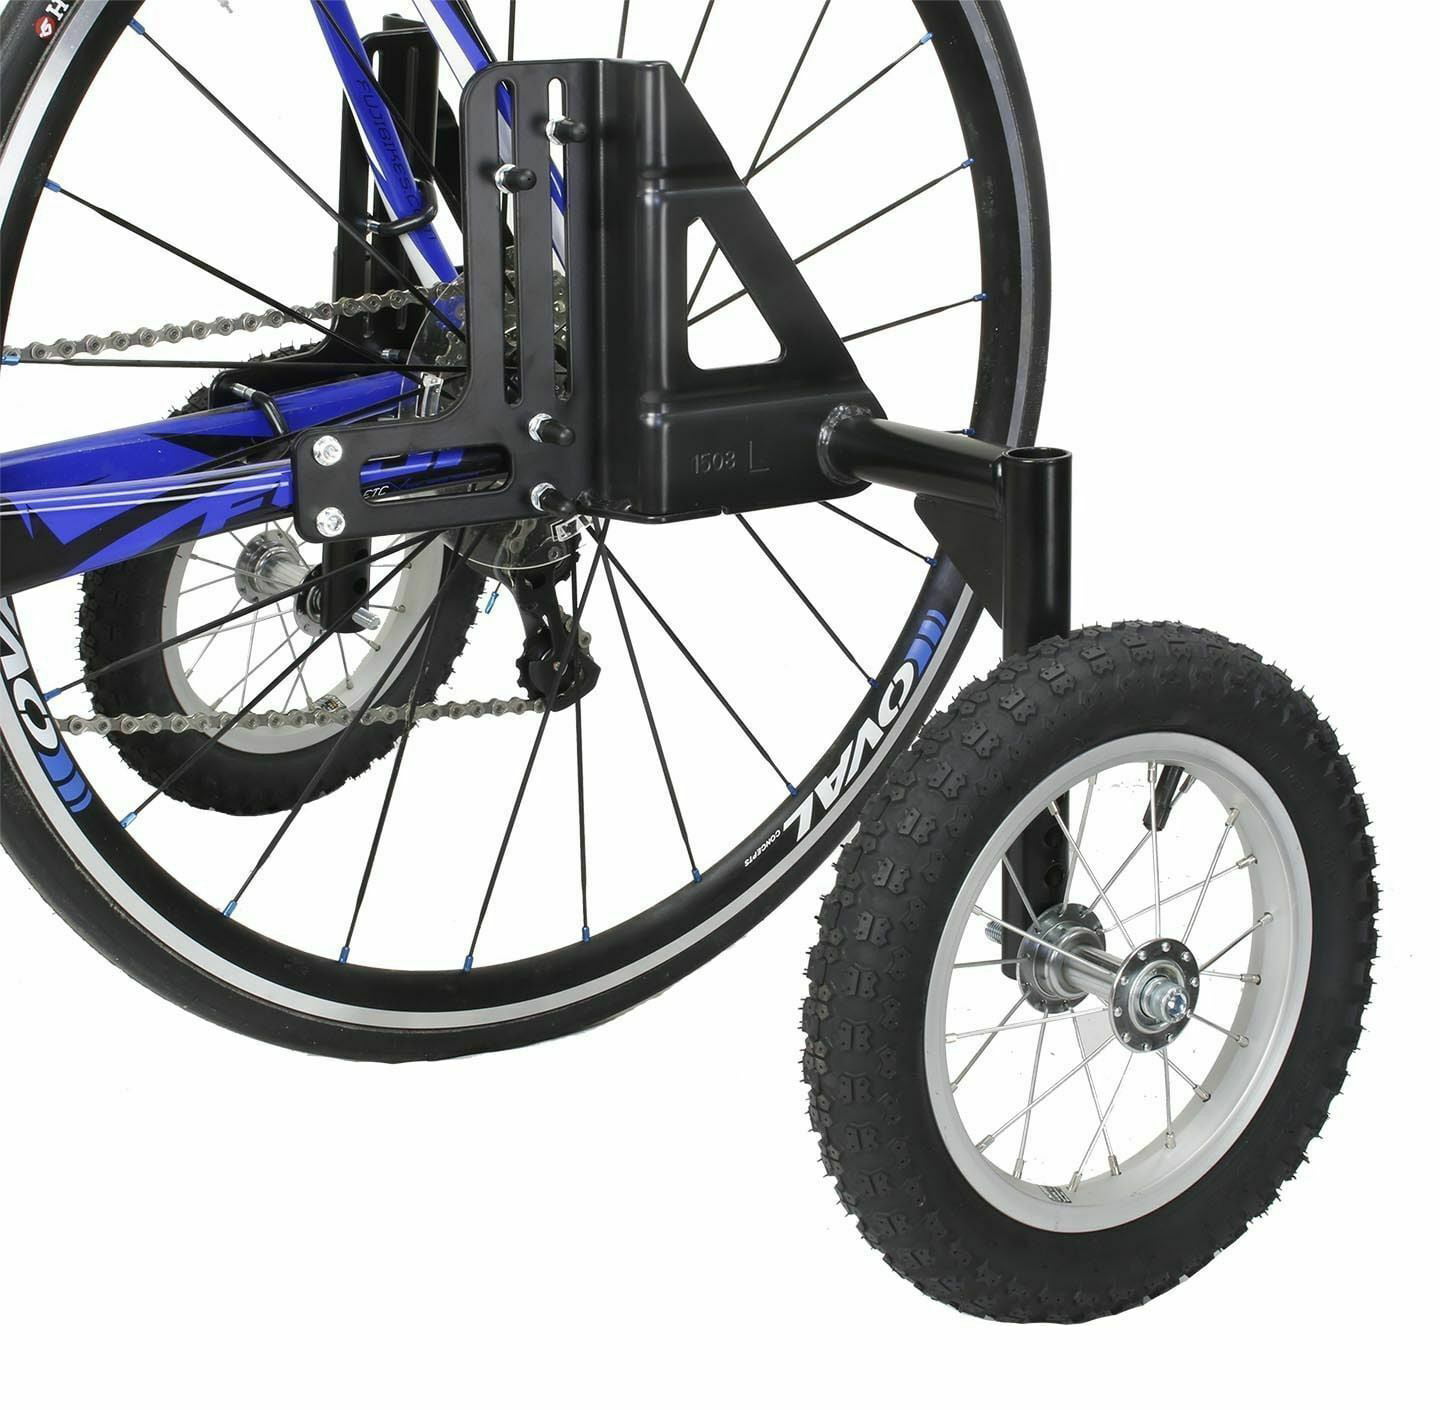 20 inch bike with training wheels walmart